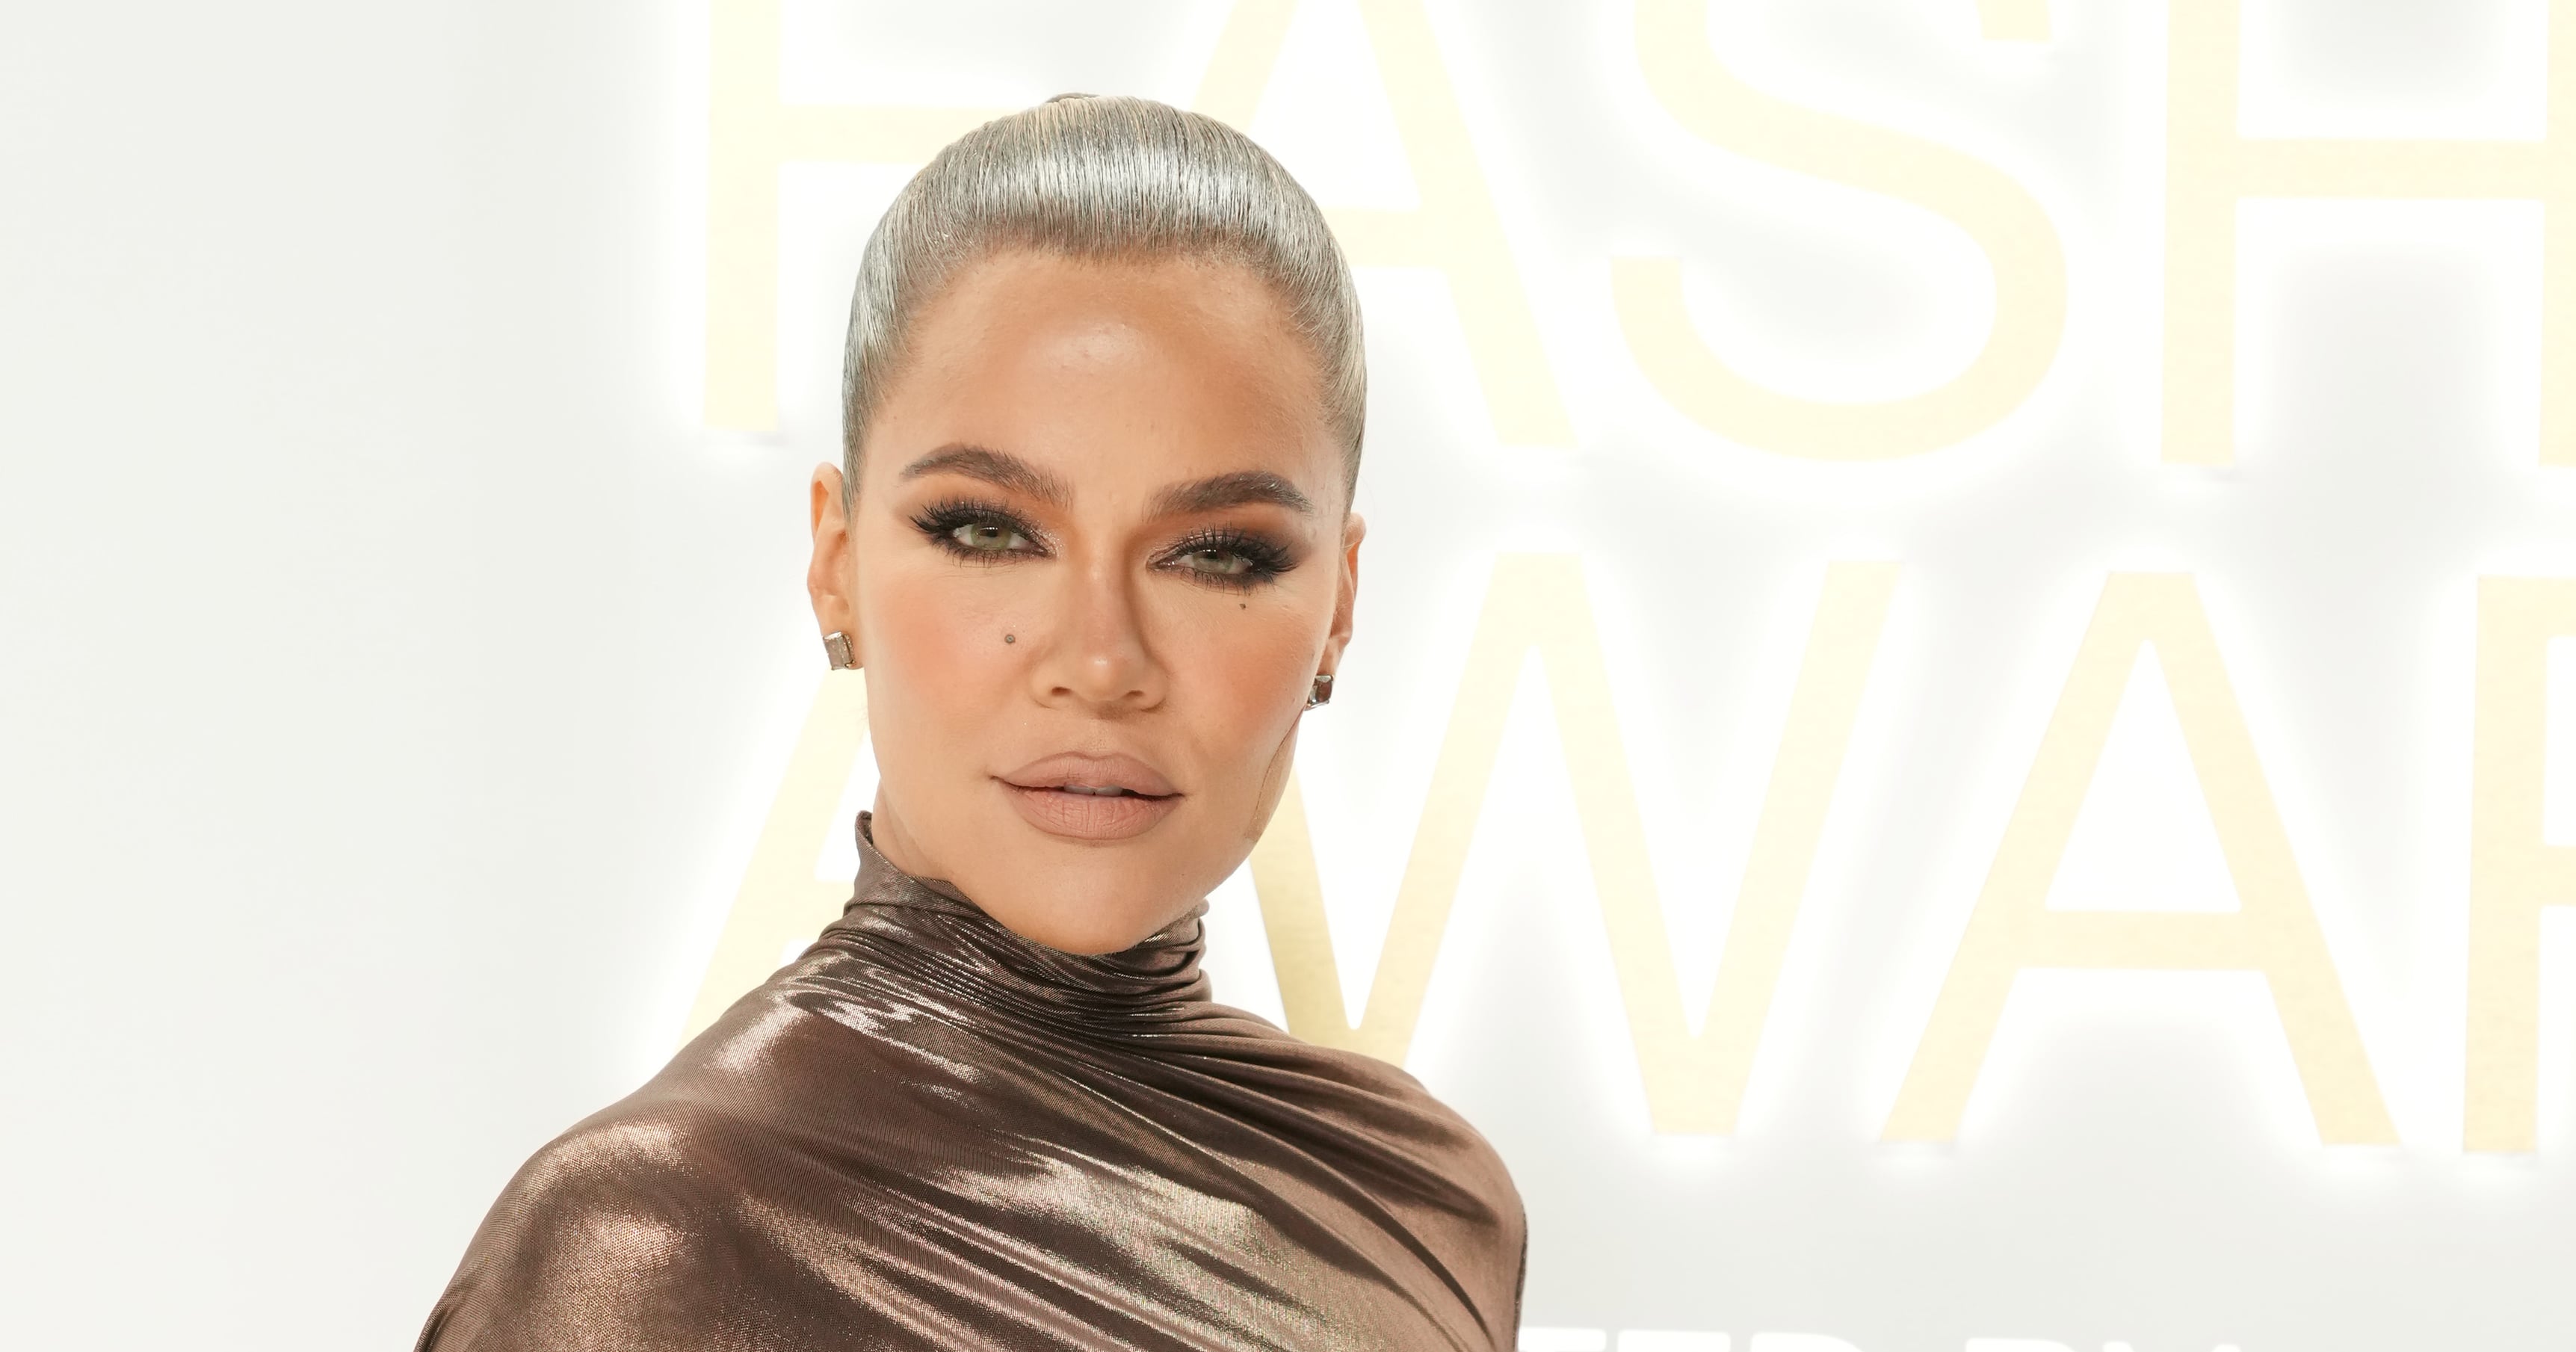 What Is Khloé Kardashian's Son's Name? | POPSUGAR Celebrity